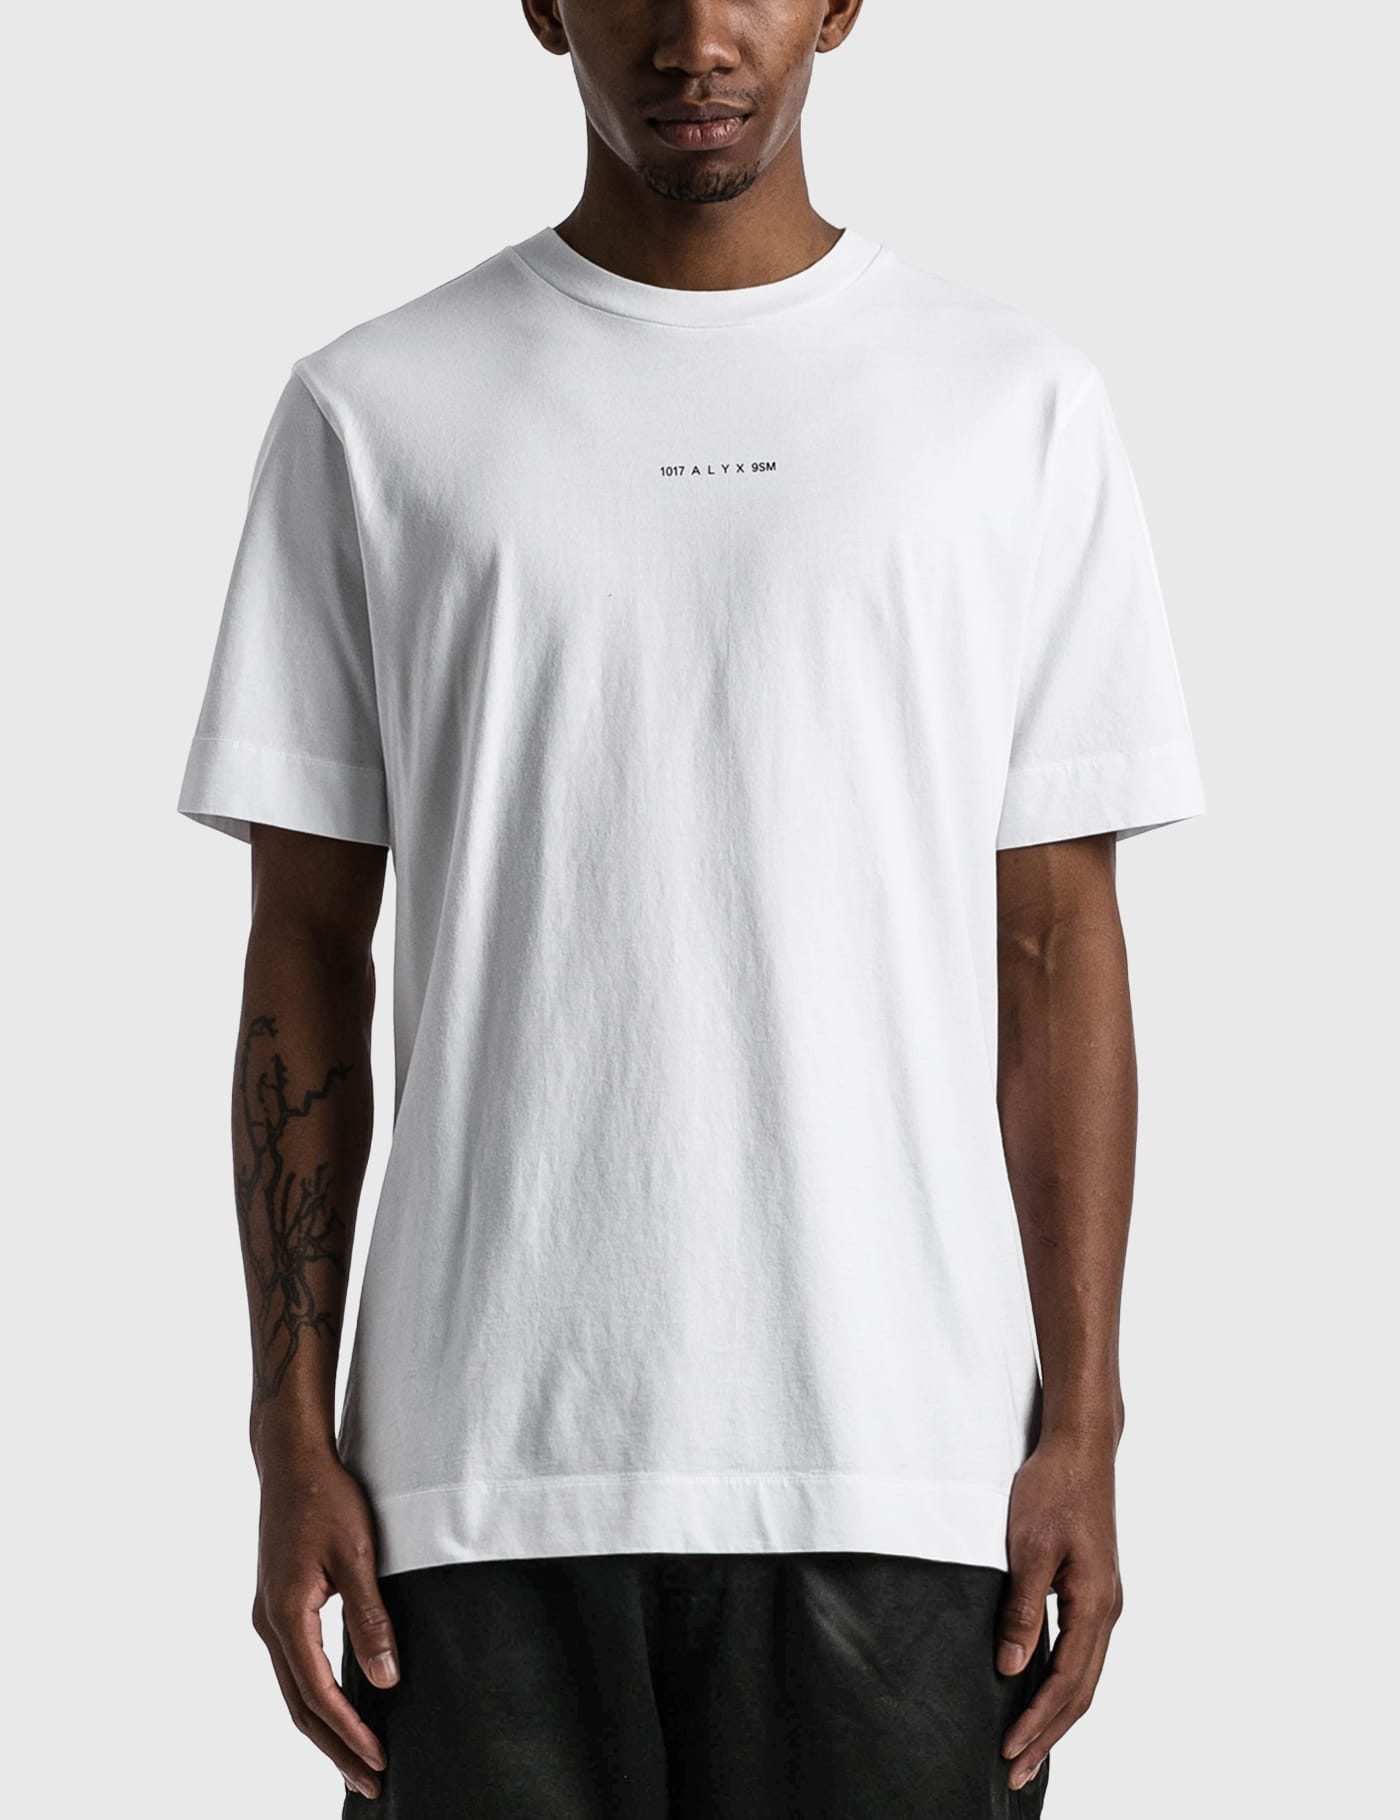 1017 ALYX 9SM - Graphic Short Sleeve T-shirt | HBX - Globally